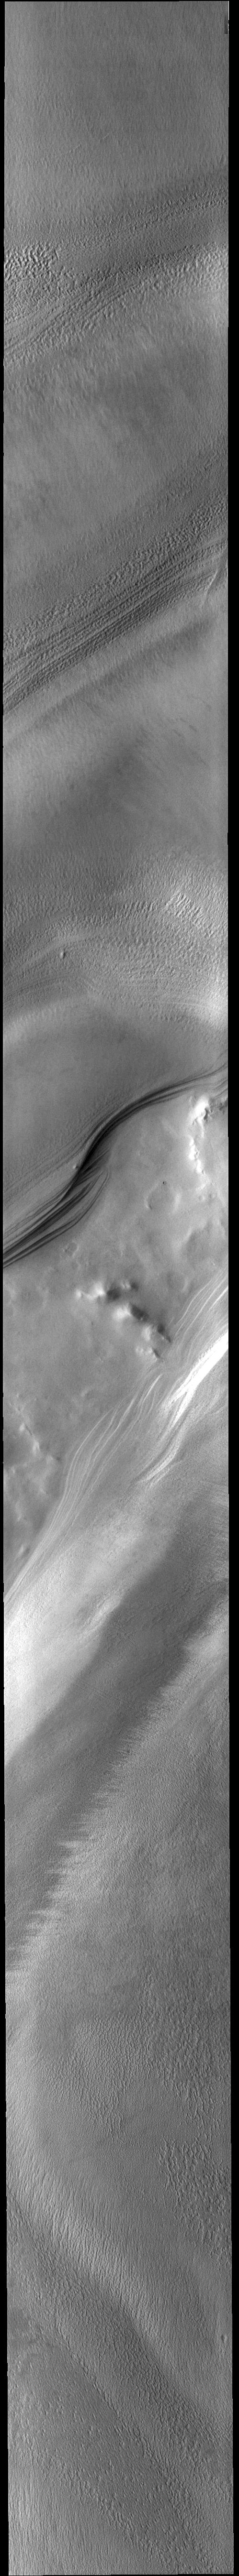 PIA23256: Chasma Australe